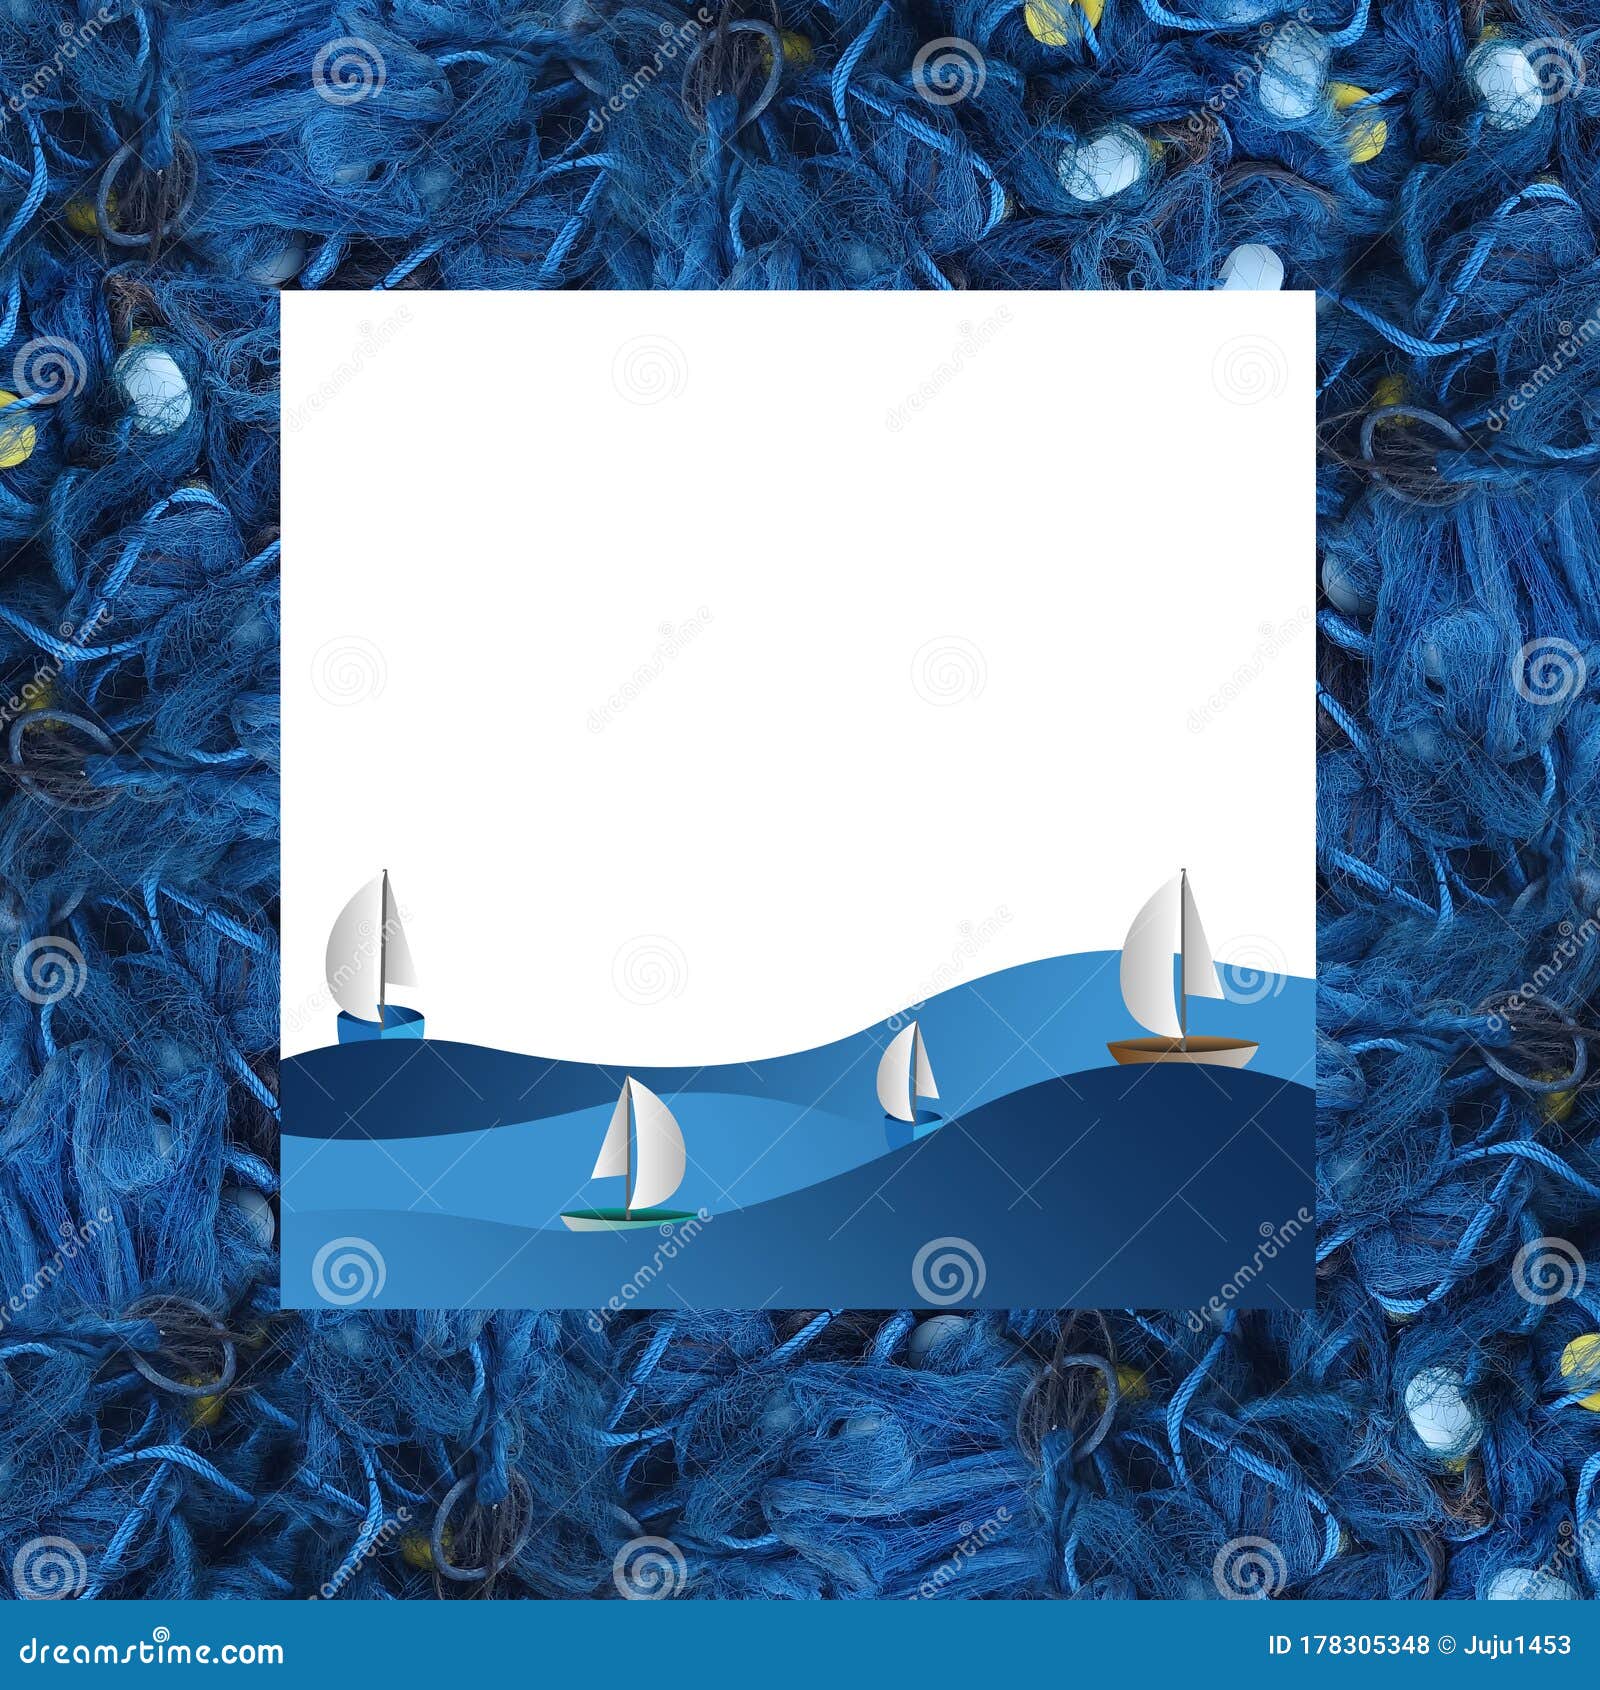 Sea, Sailor Background Design. Fishing Net. Fish Restaurant Menu Cover  Template. Stock Illustration - Illustration of design, template: 178305348